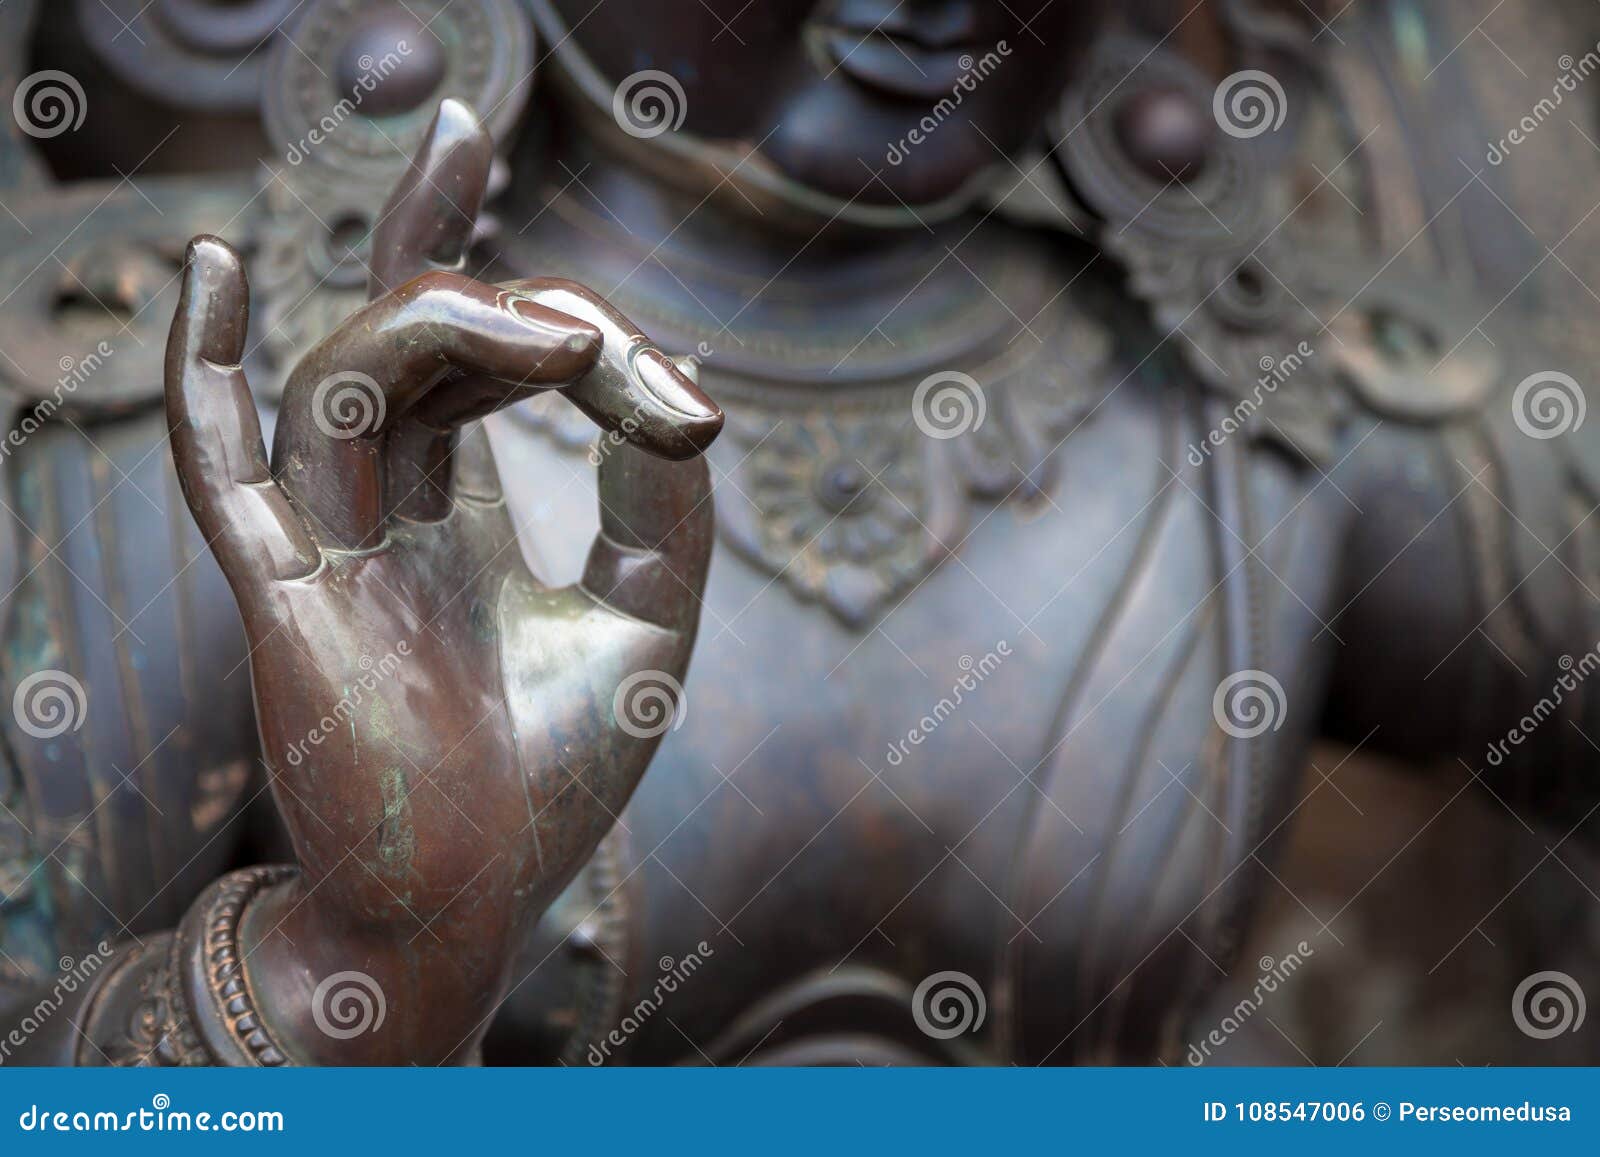 detail of buddha statue with karana mudra hand position